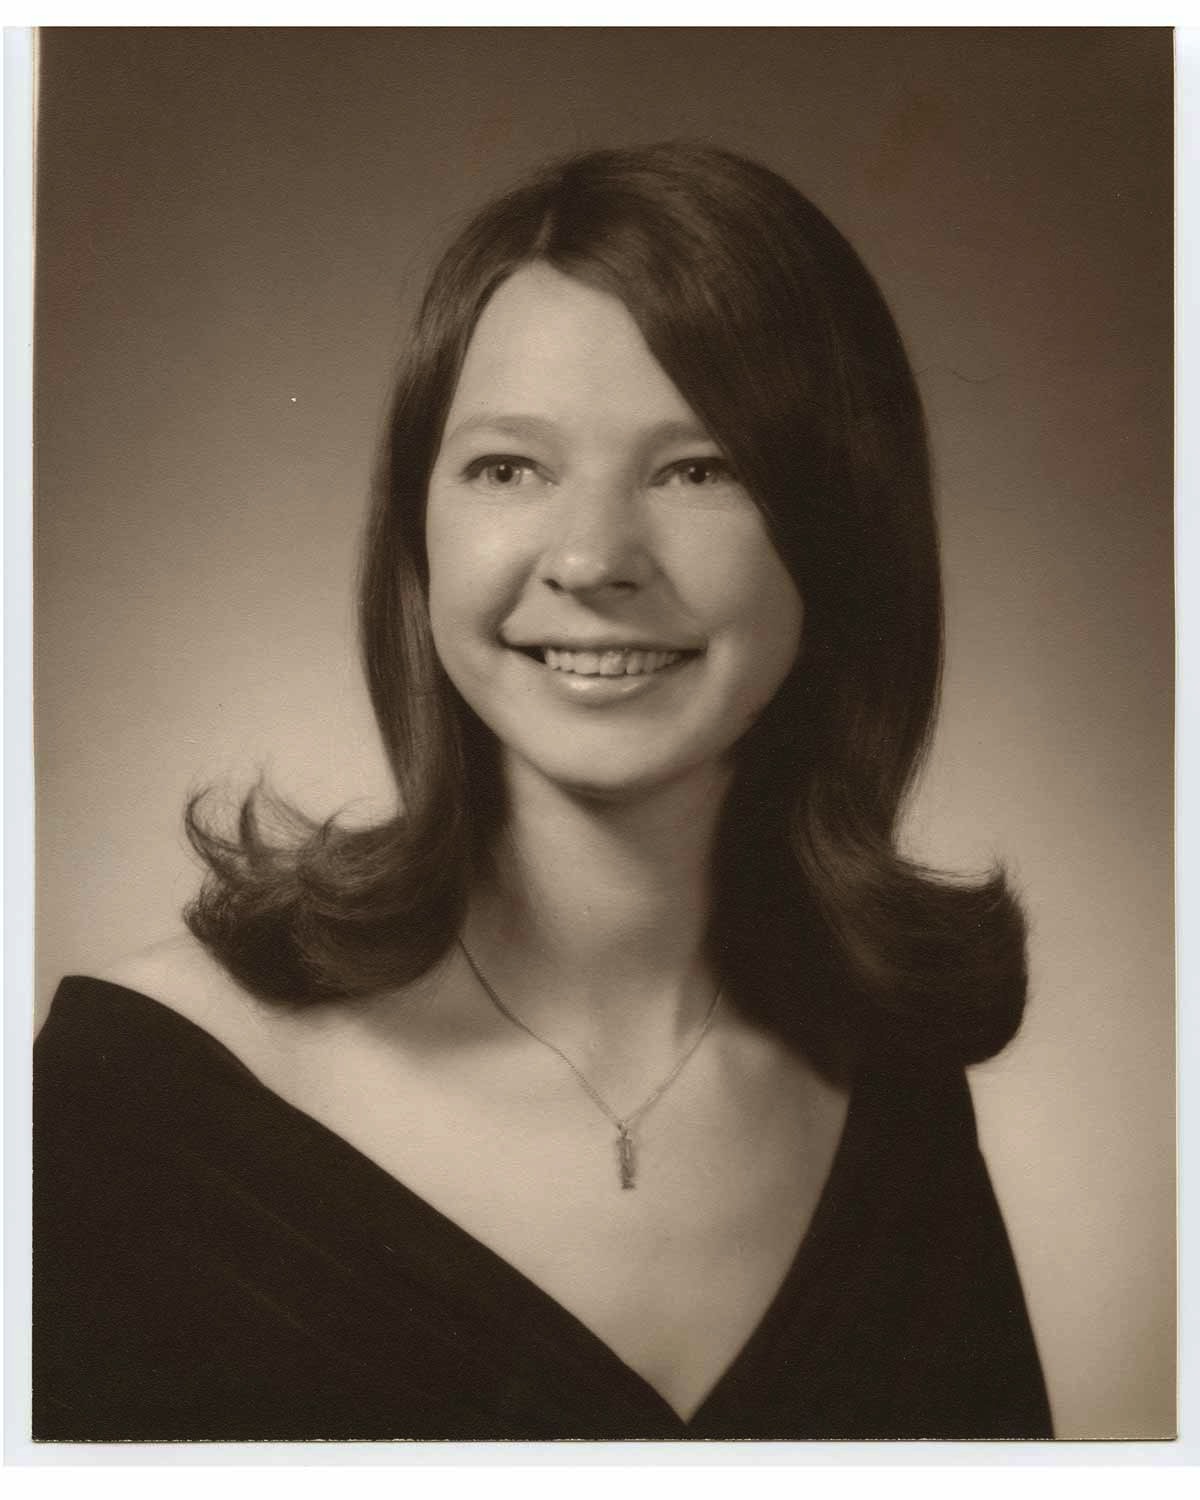 High school graduation image, 1960's